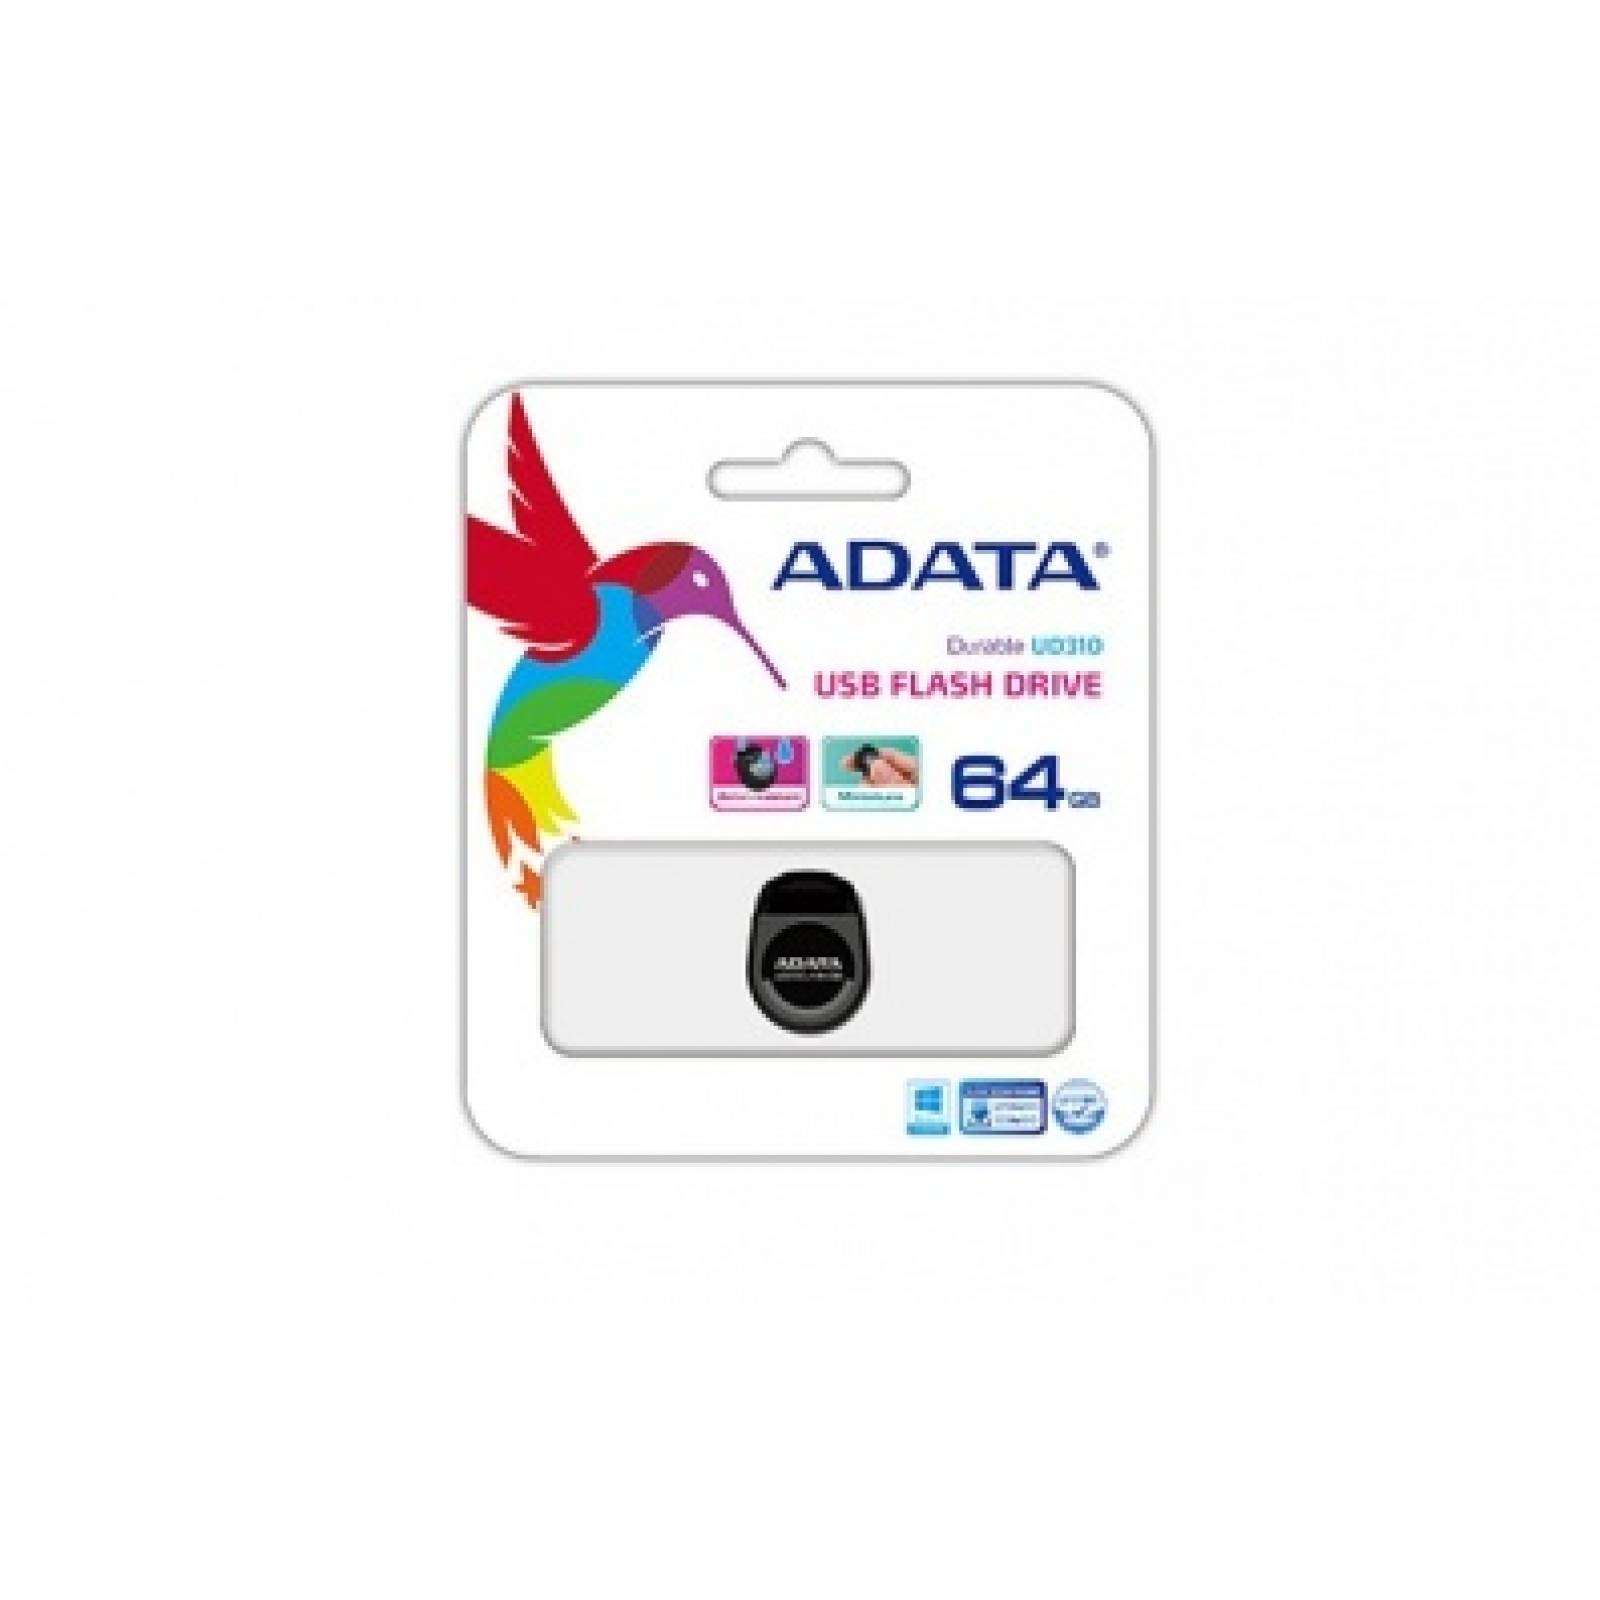 Memoria USB Adata DashDrive Durable UD310 64GB USB 2.0 Negro